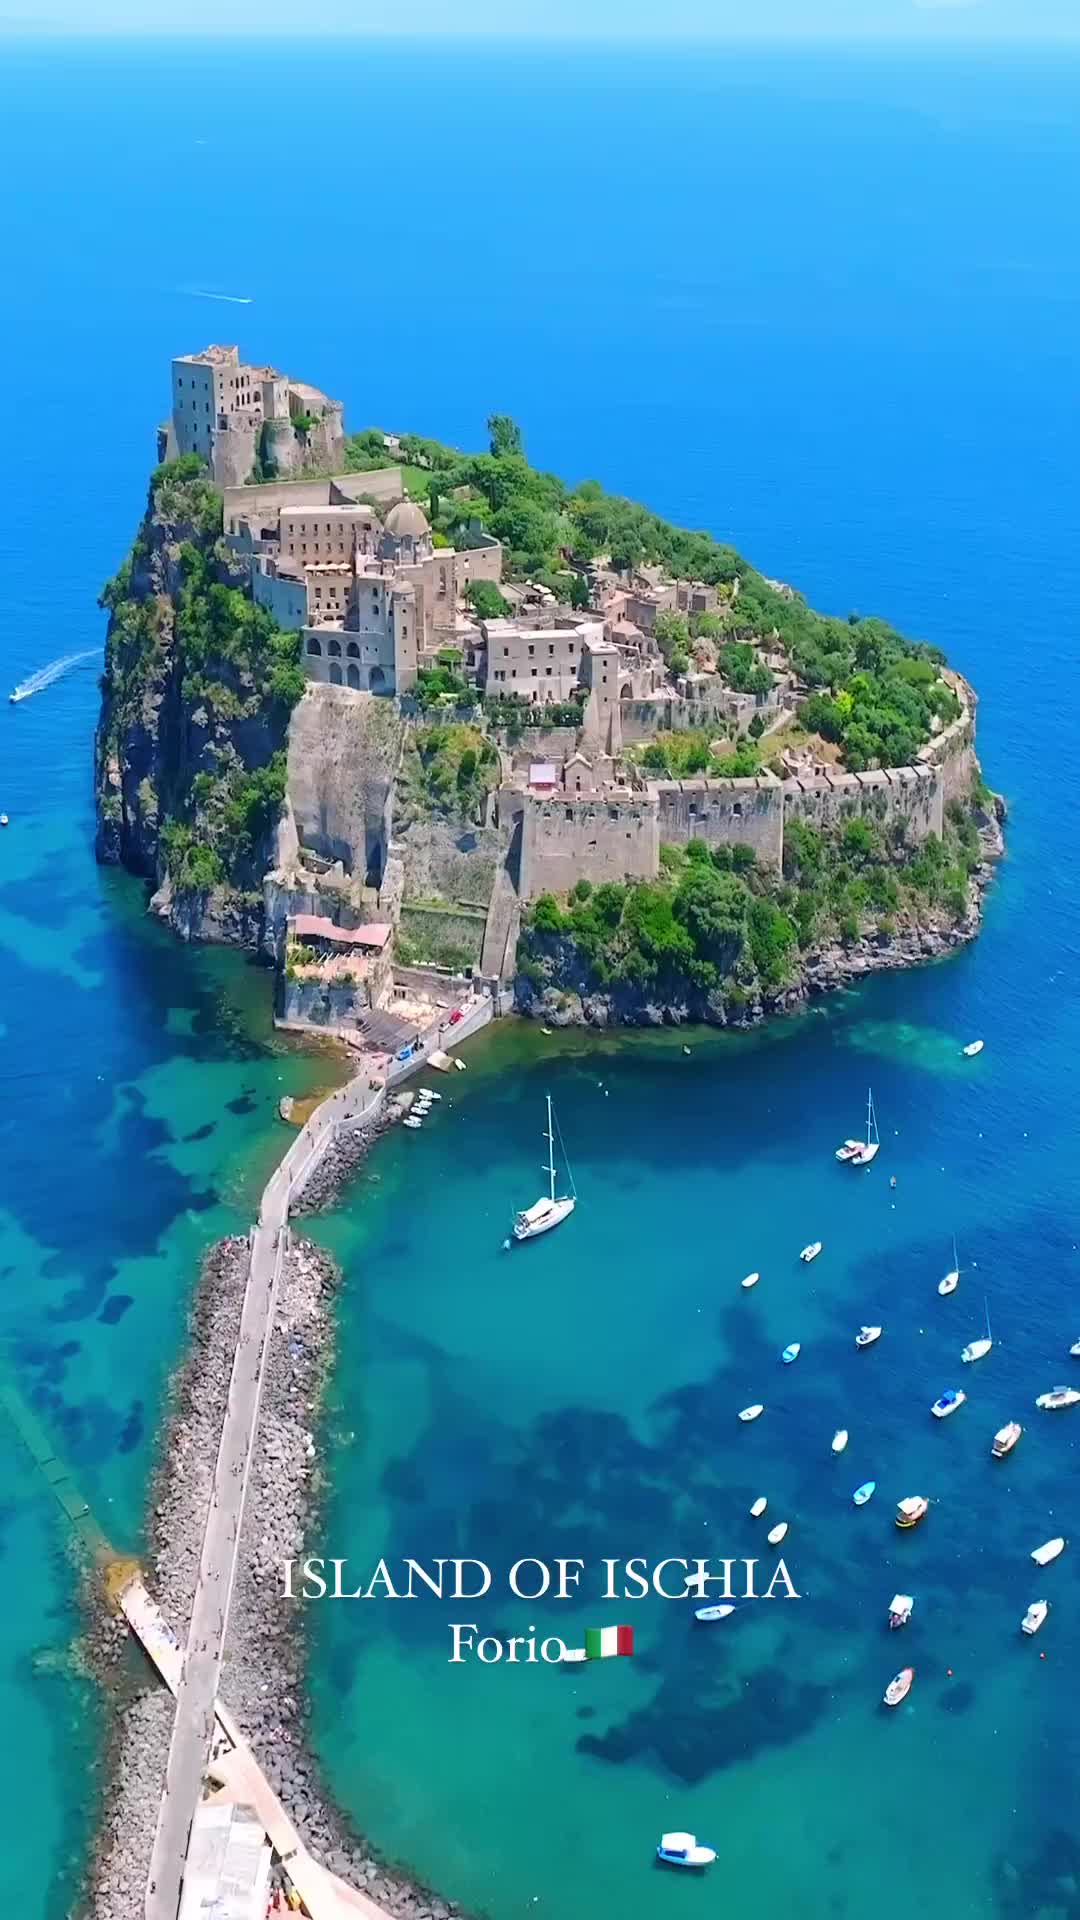 Explore the Beauty of Ischia Island, Italy 🇮🇹